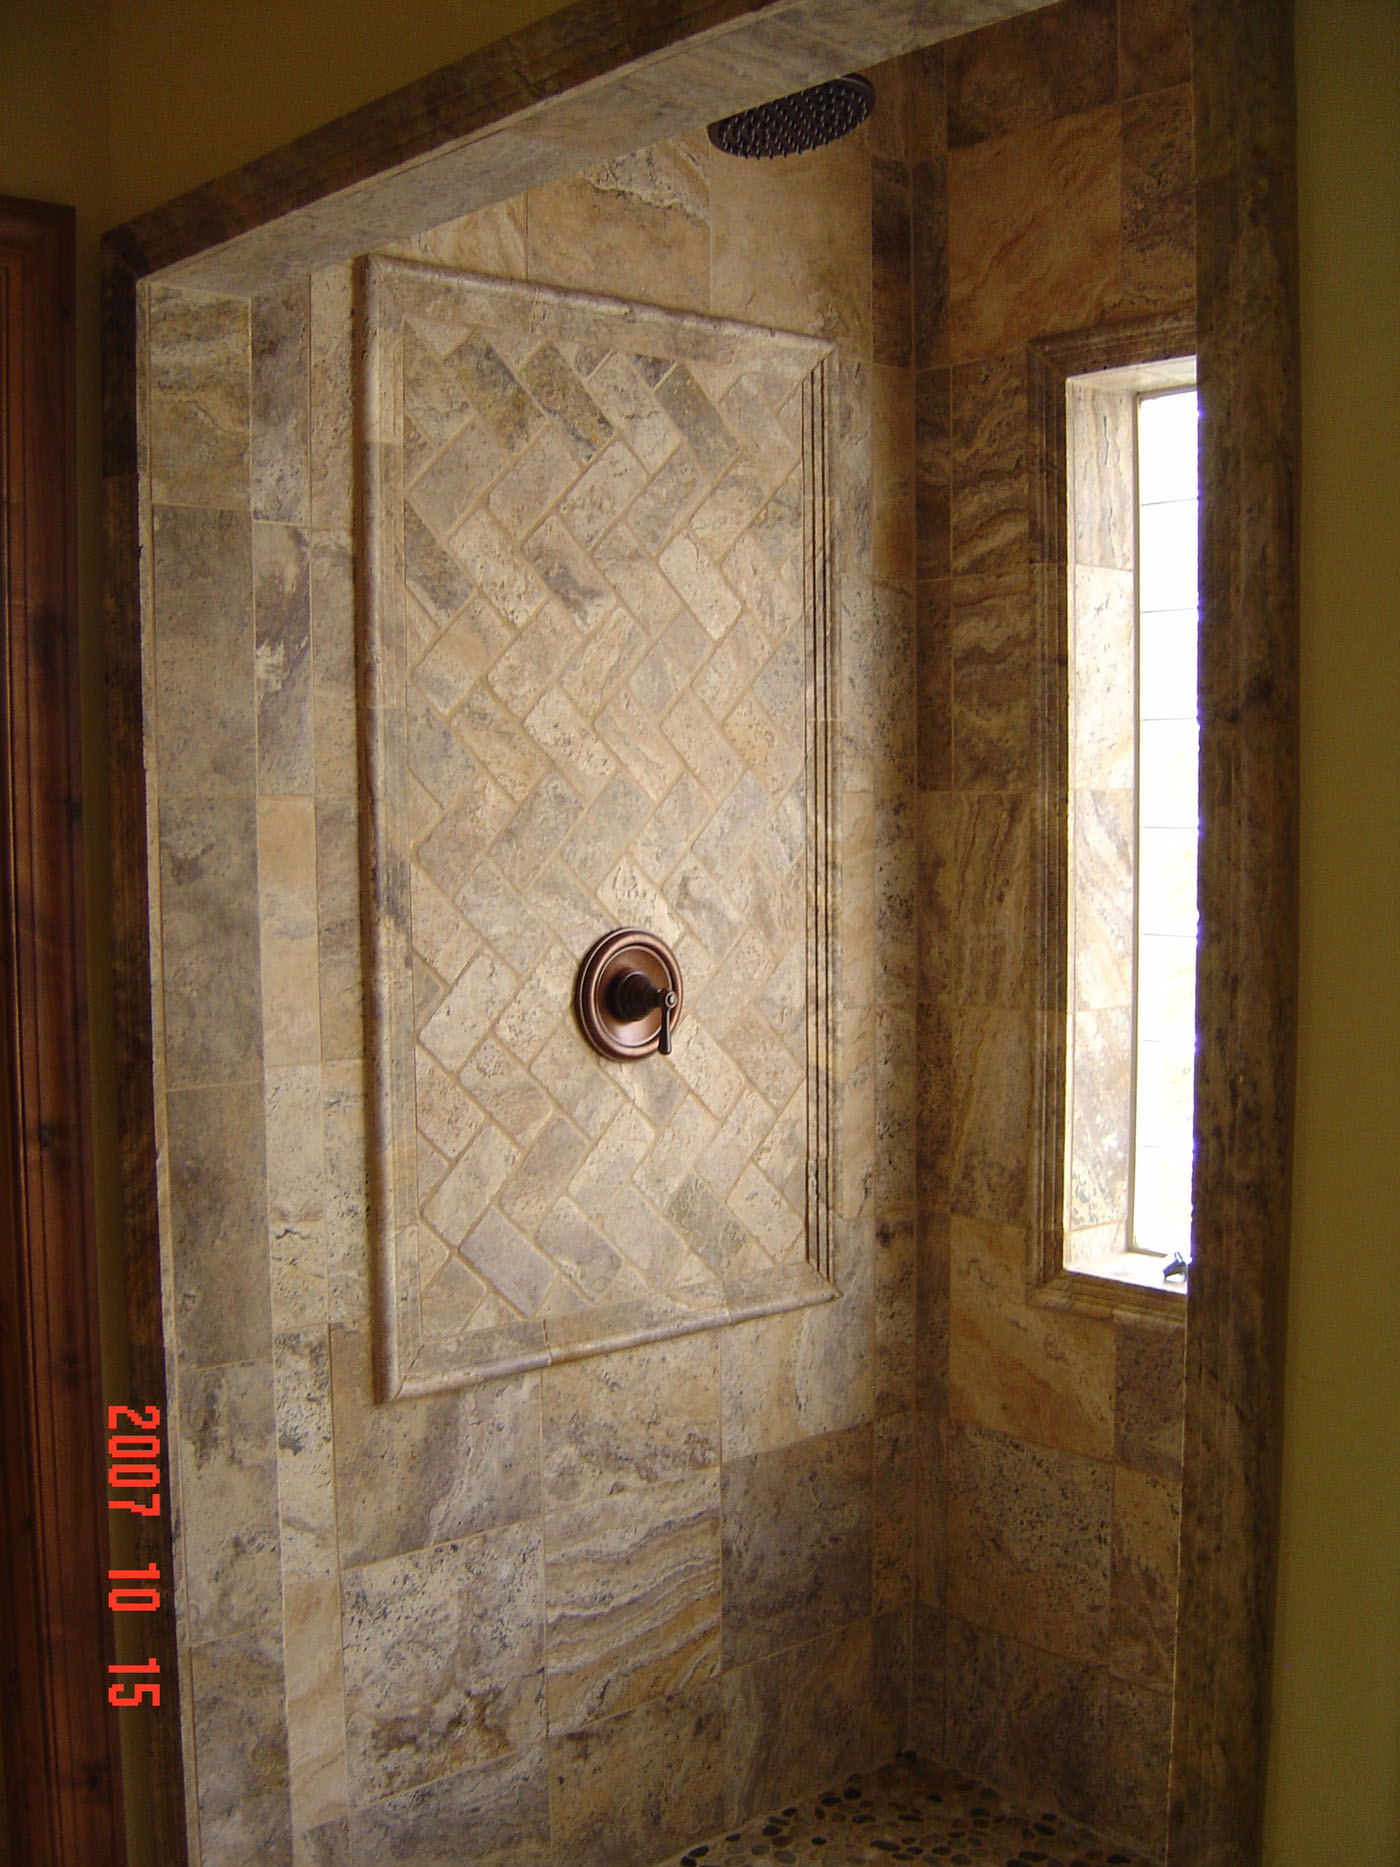 custom tile shower stall with glass block window